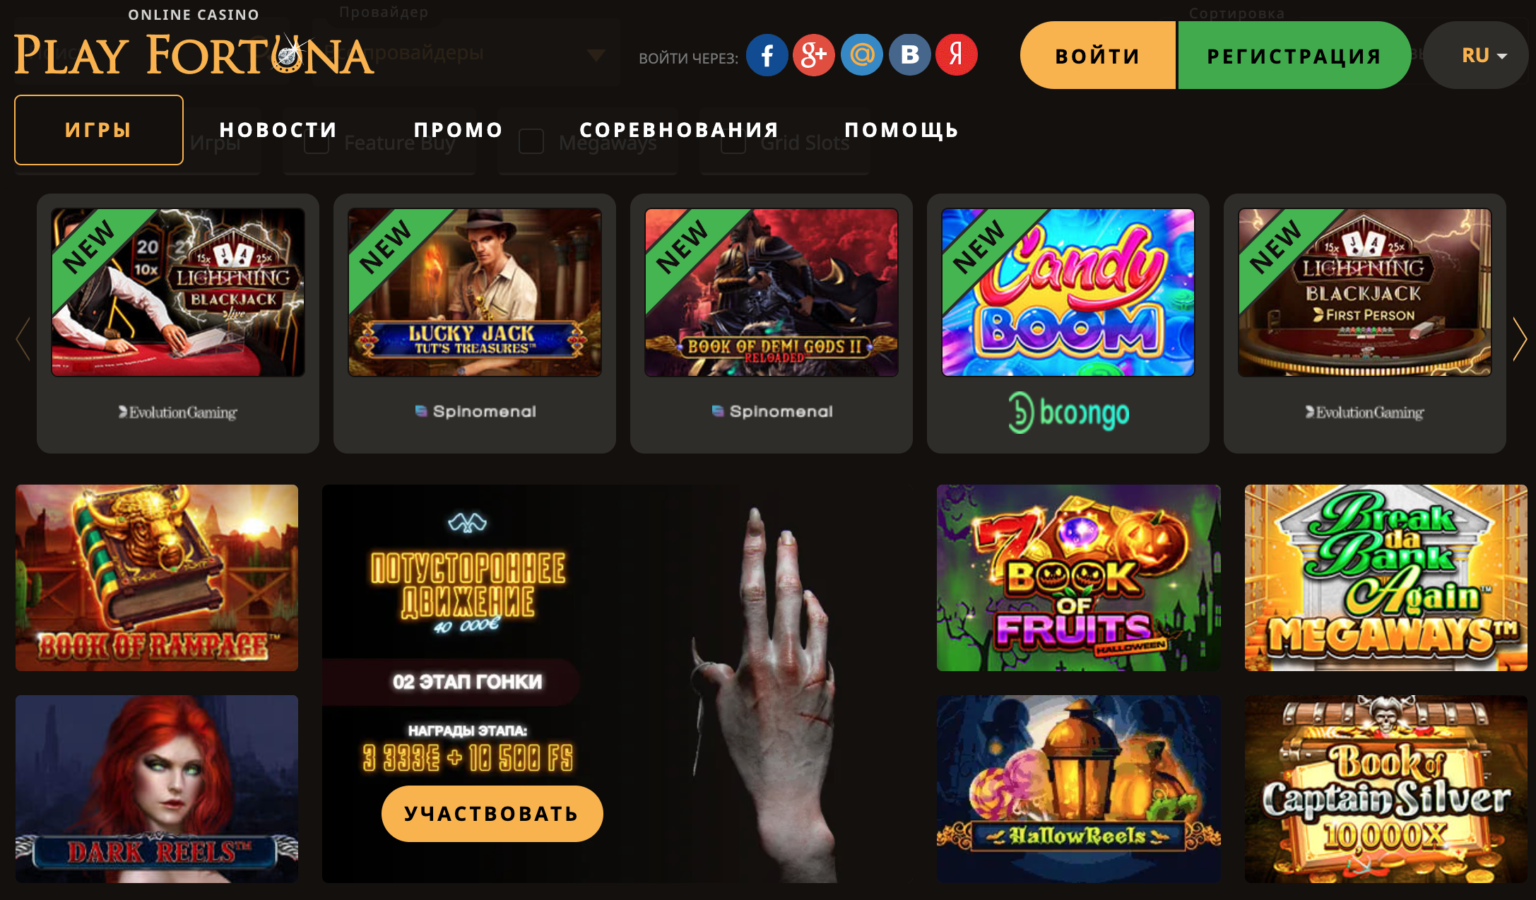 Вход на официальный сайт онлайн-казино Play Fortuna